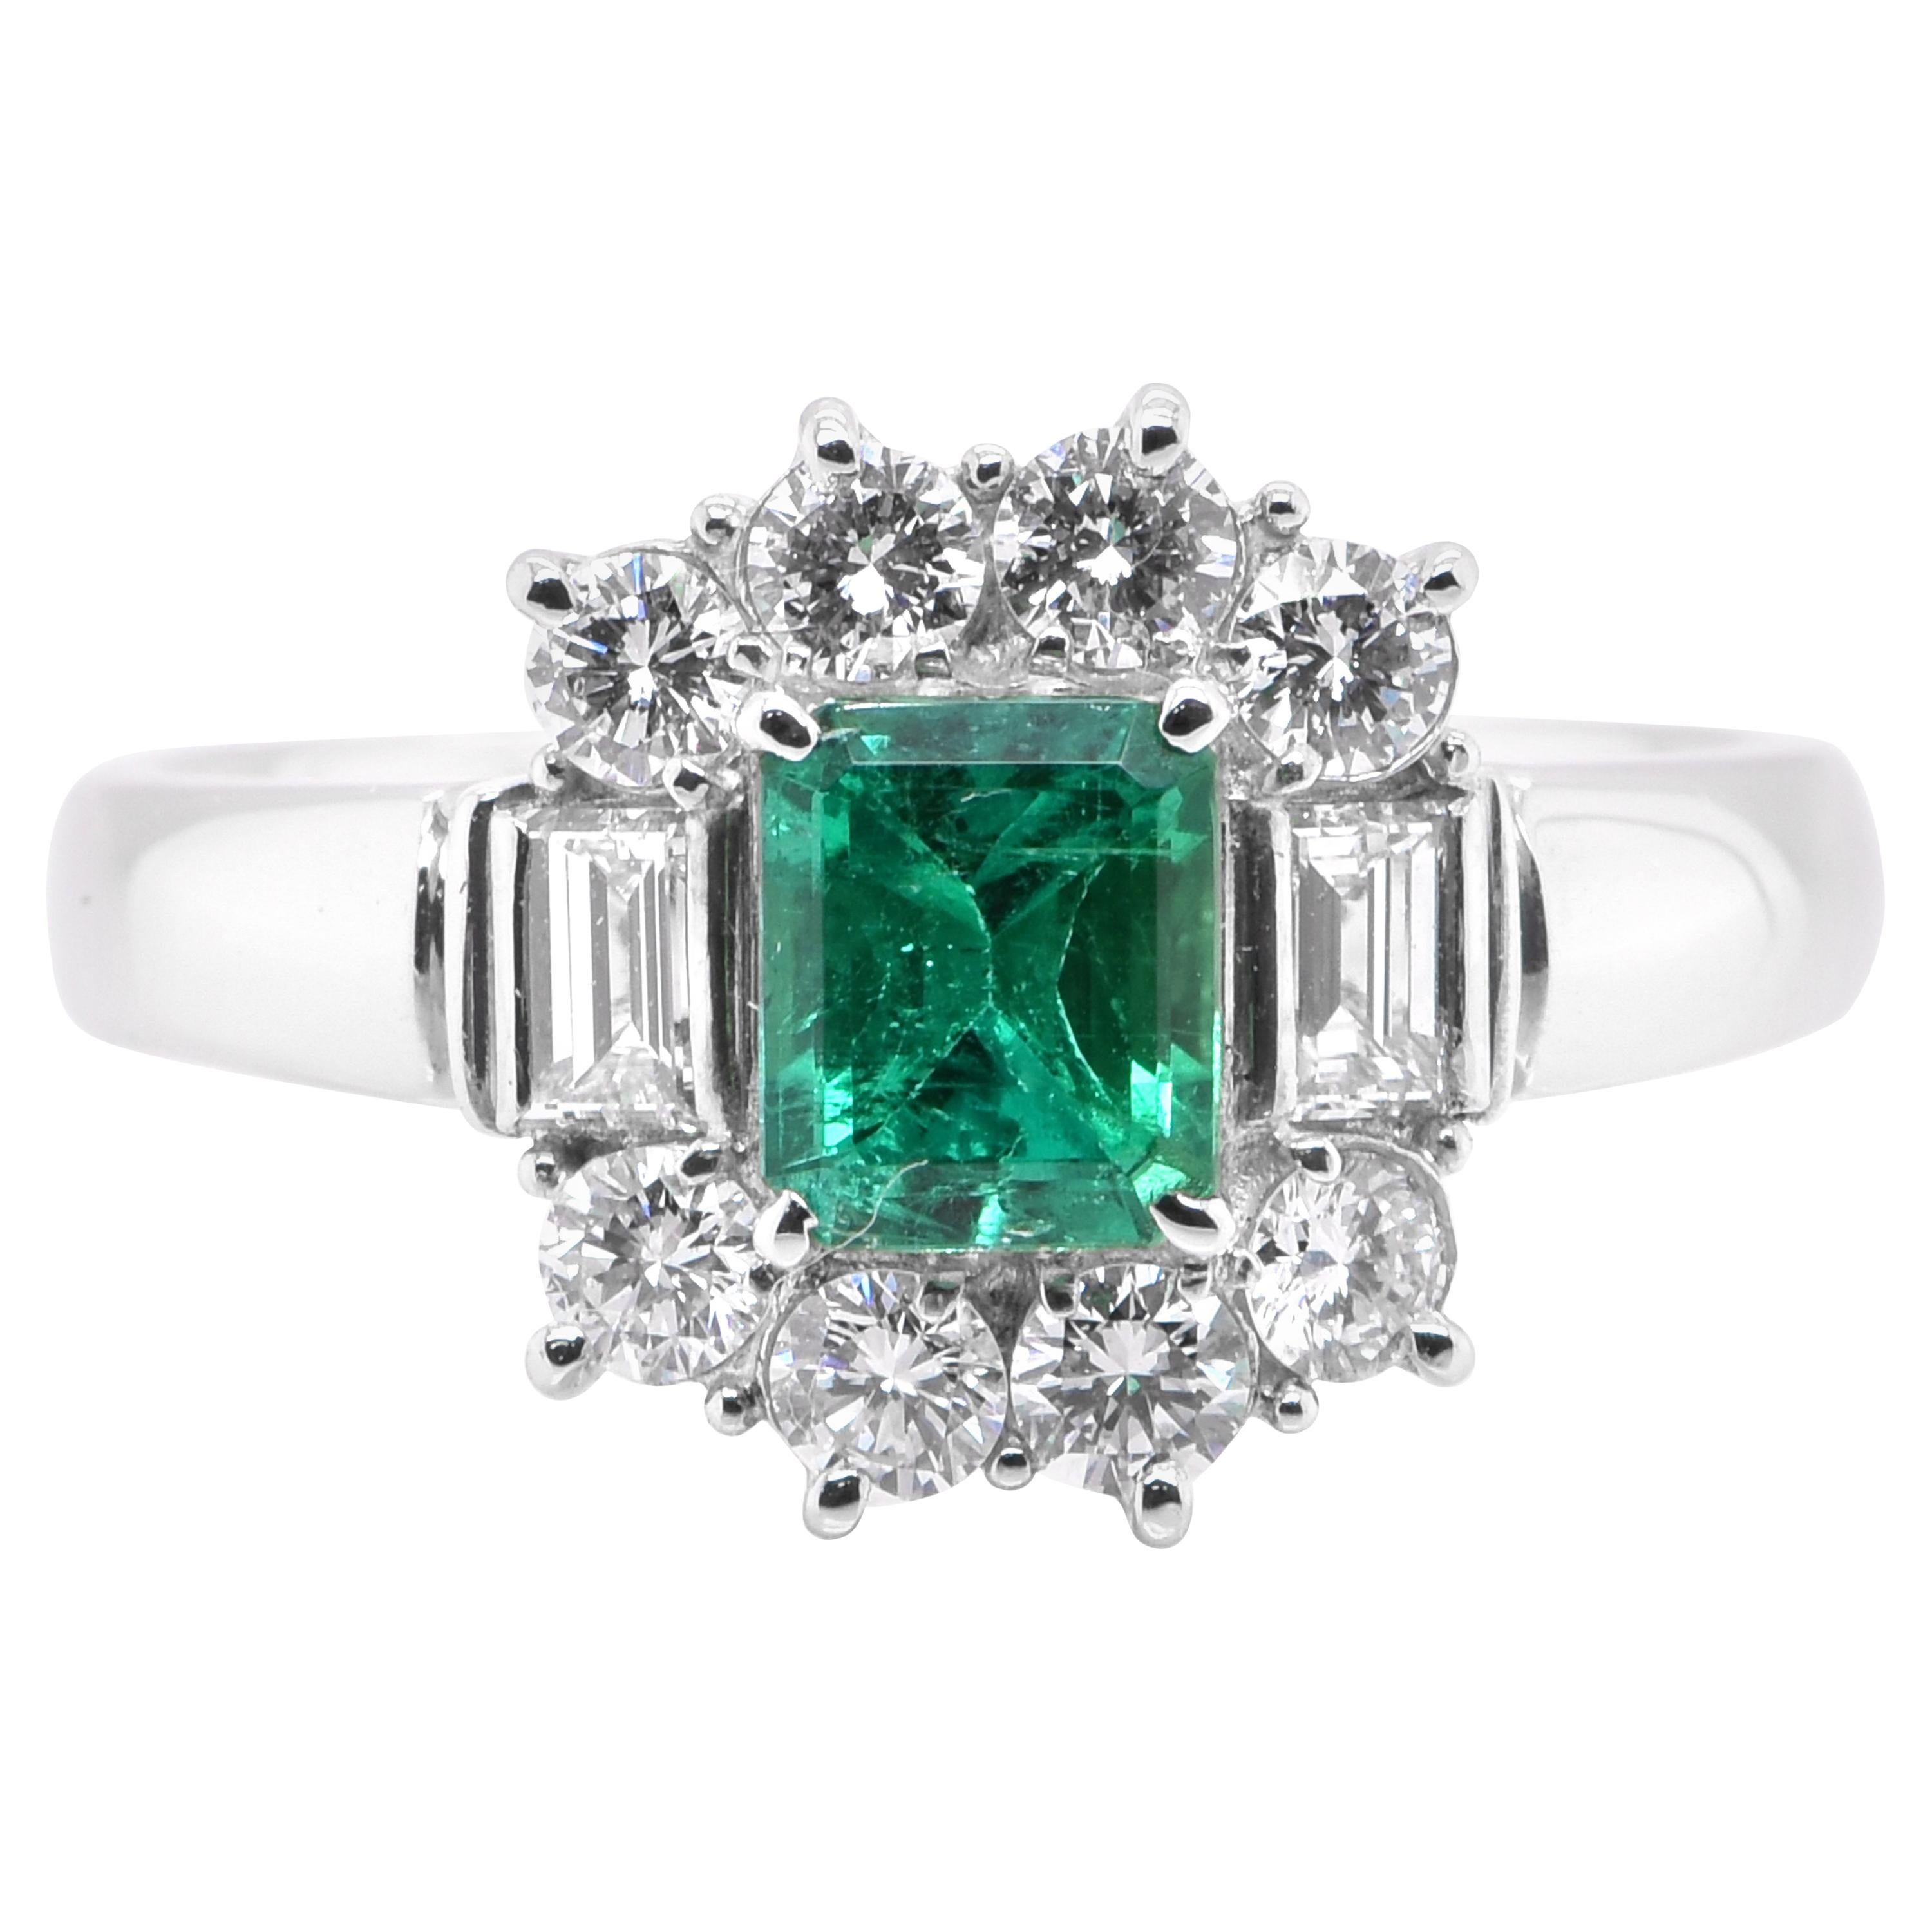 0.71 Carat Natural Emerald and Diamond Halo Ring Set in Platinum